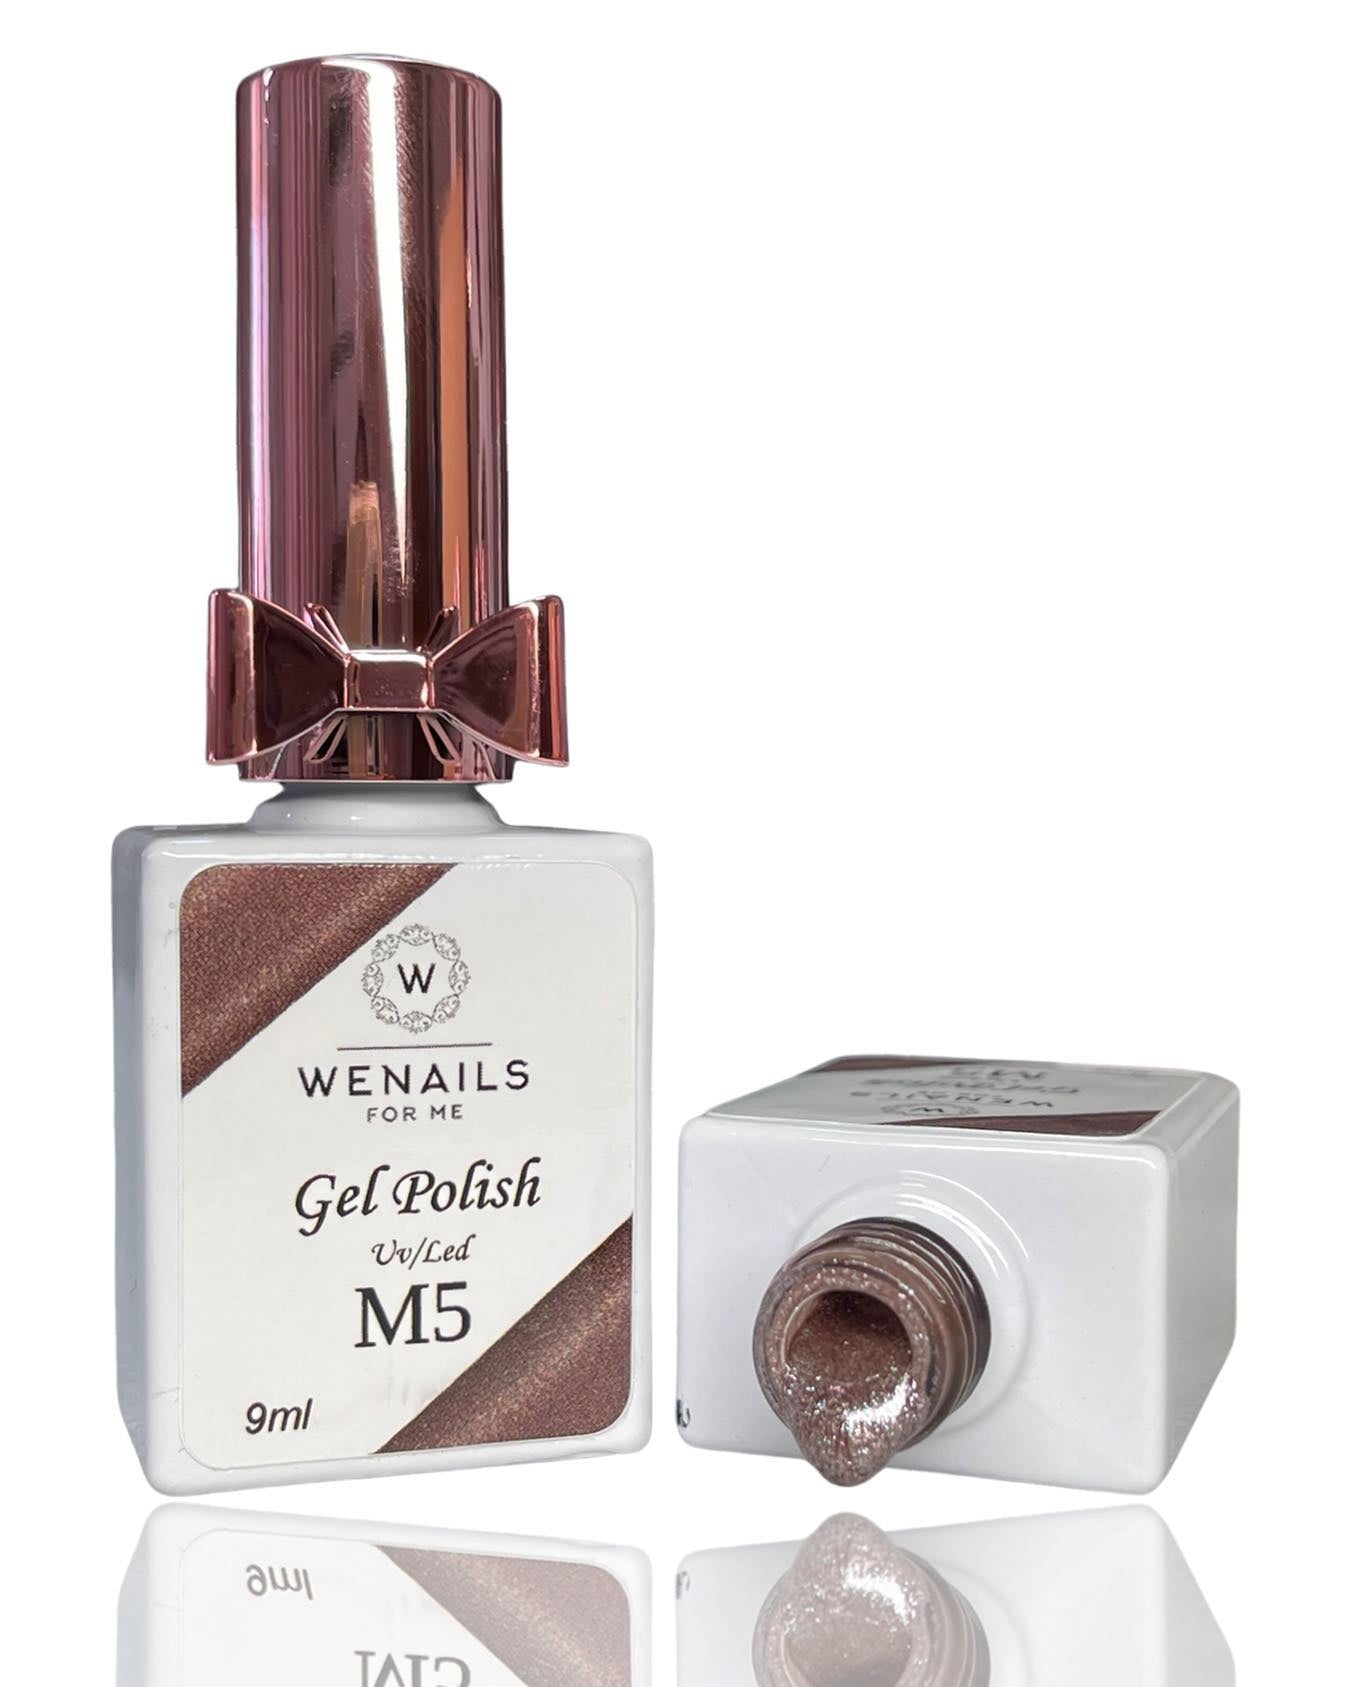 M5 - gel polish 9ml (nouveau packaging)